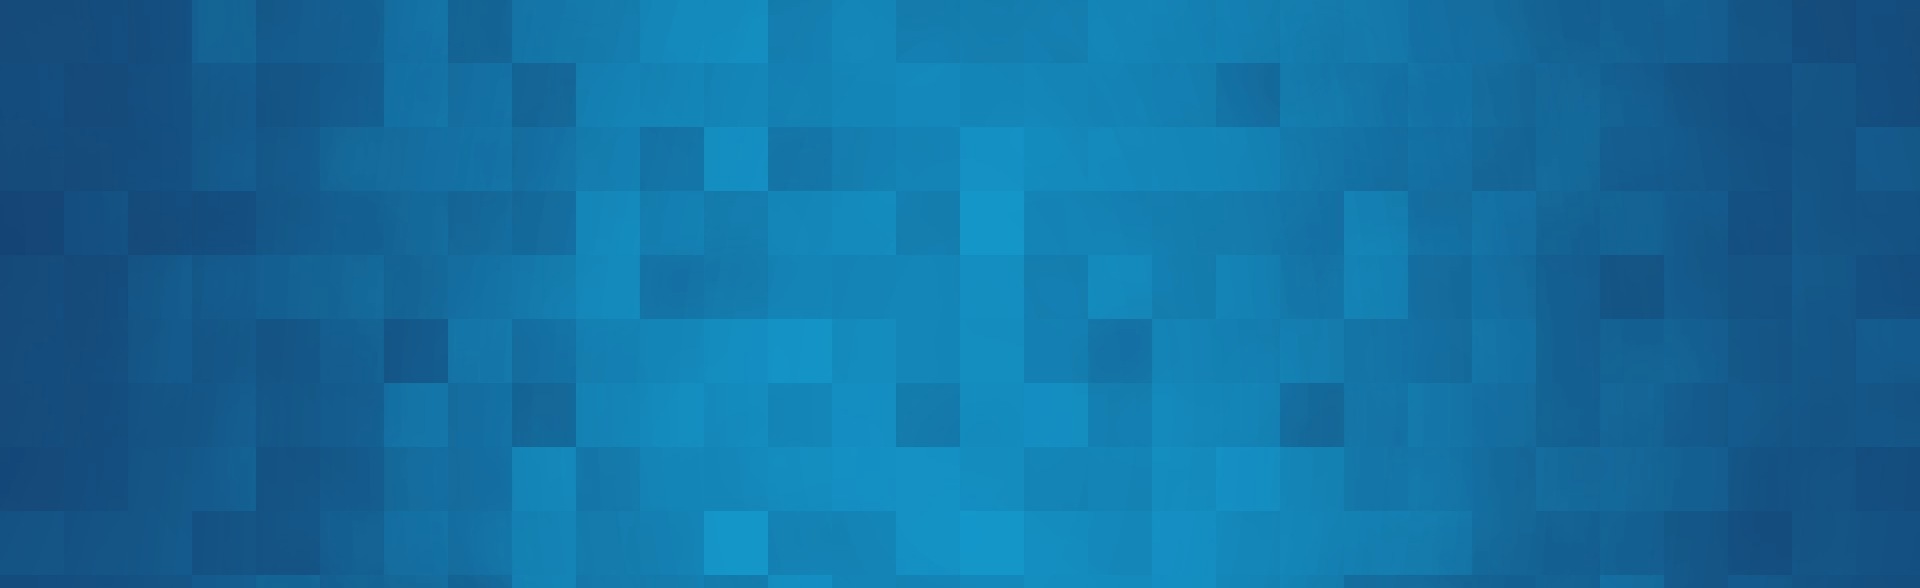 pixel-blue-background